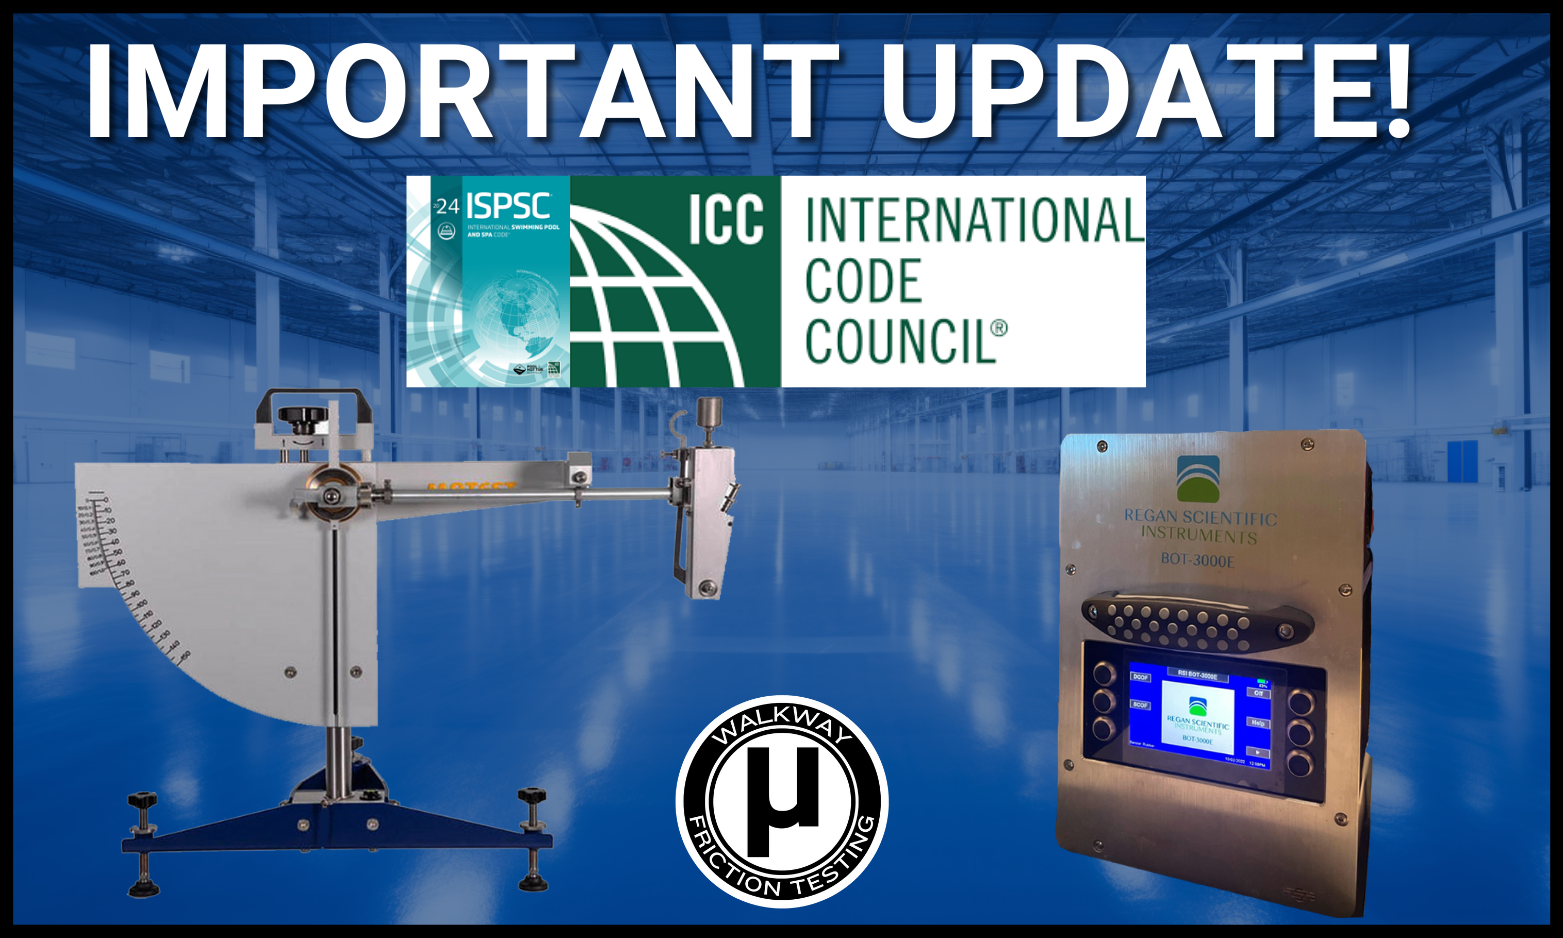 ISPSC Update